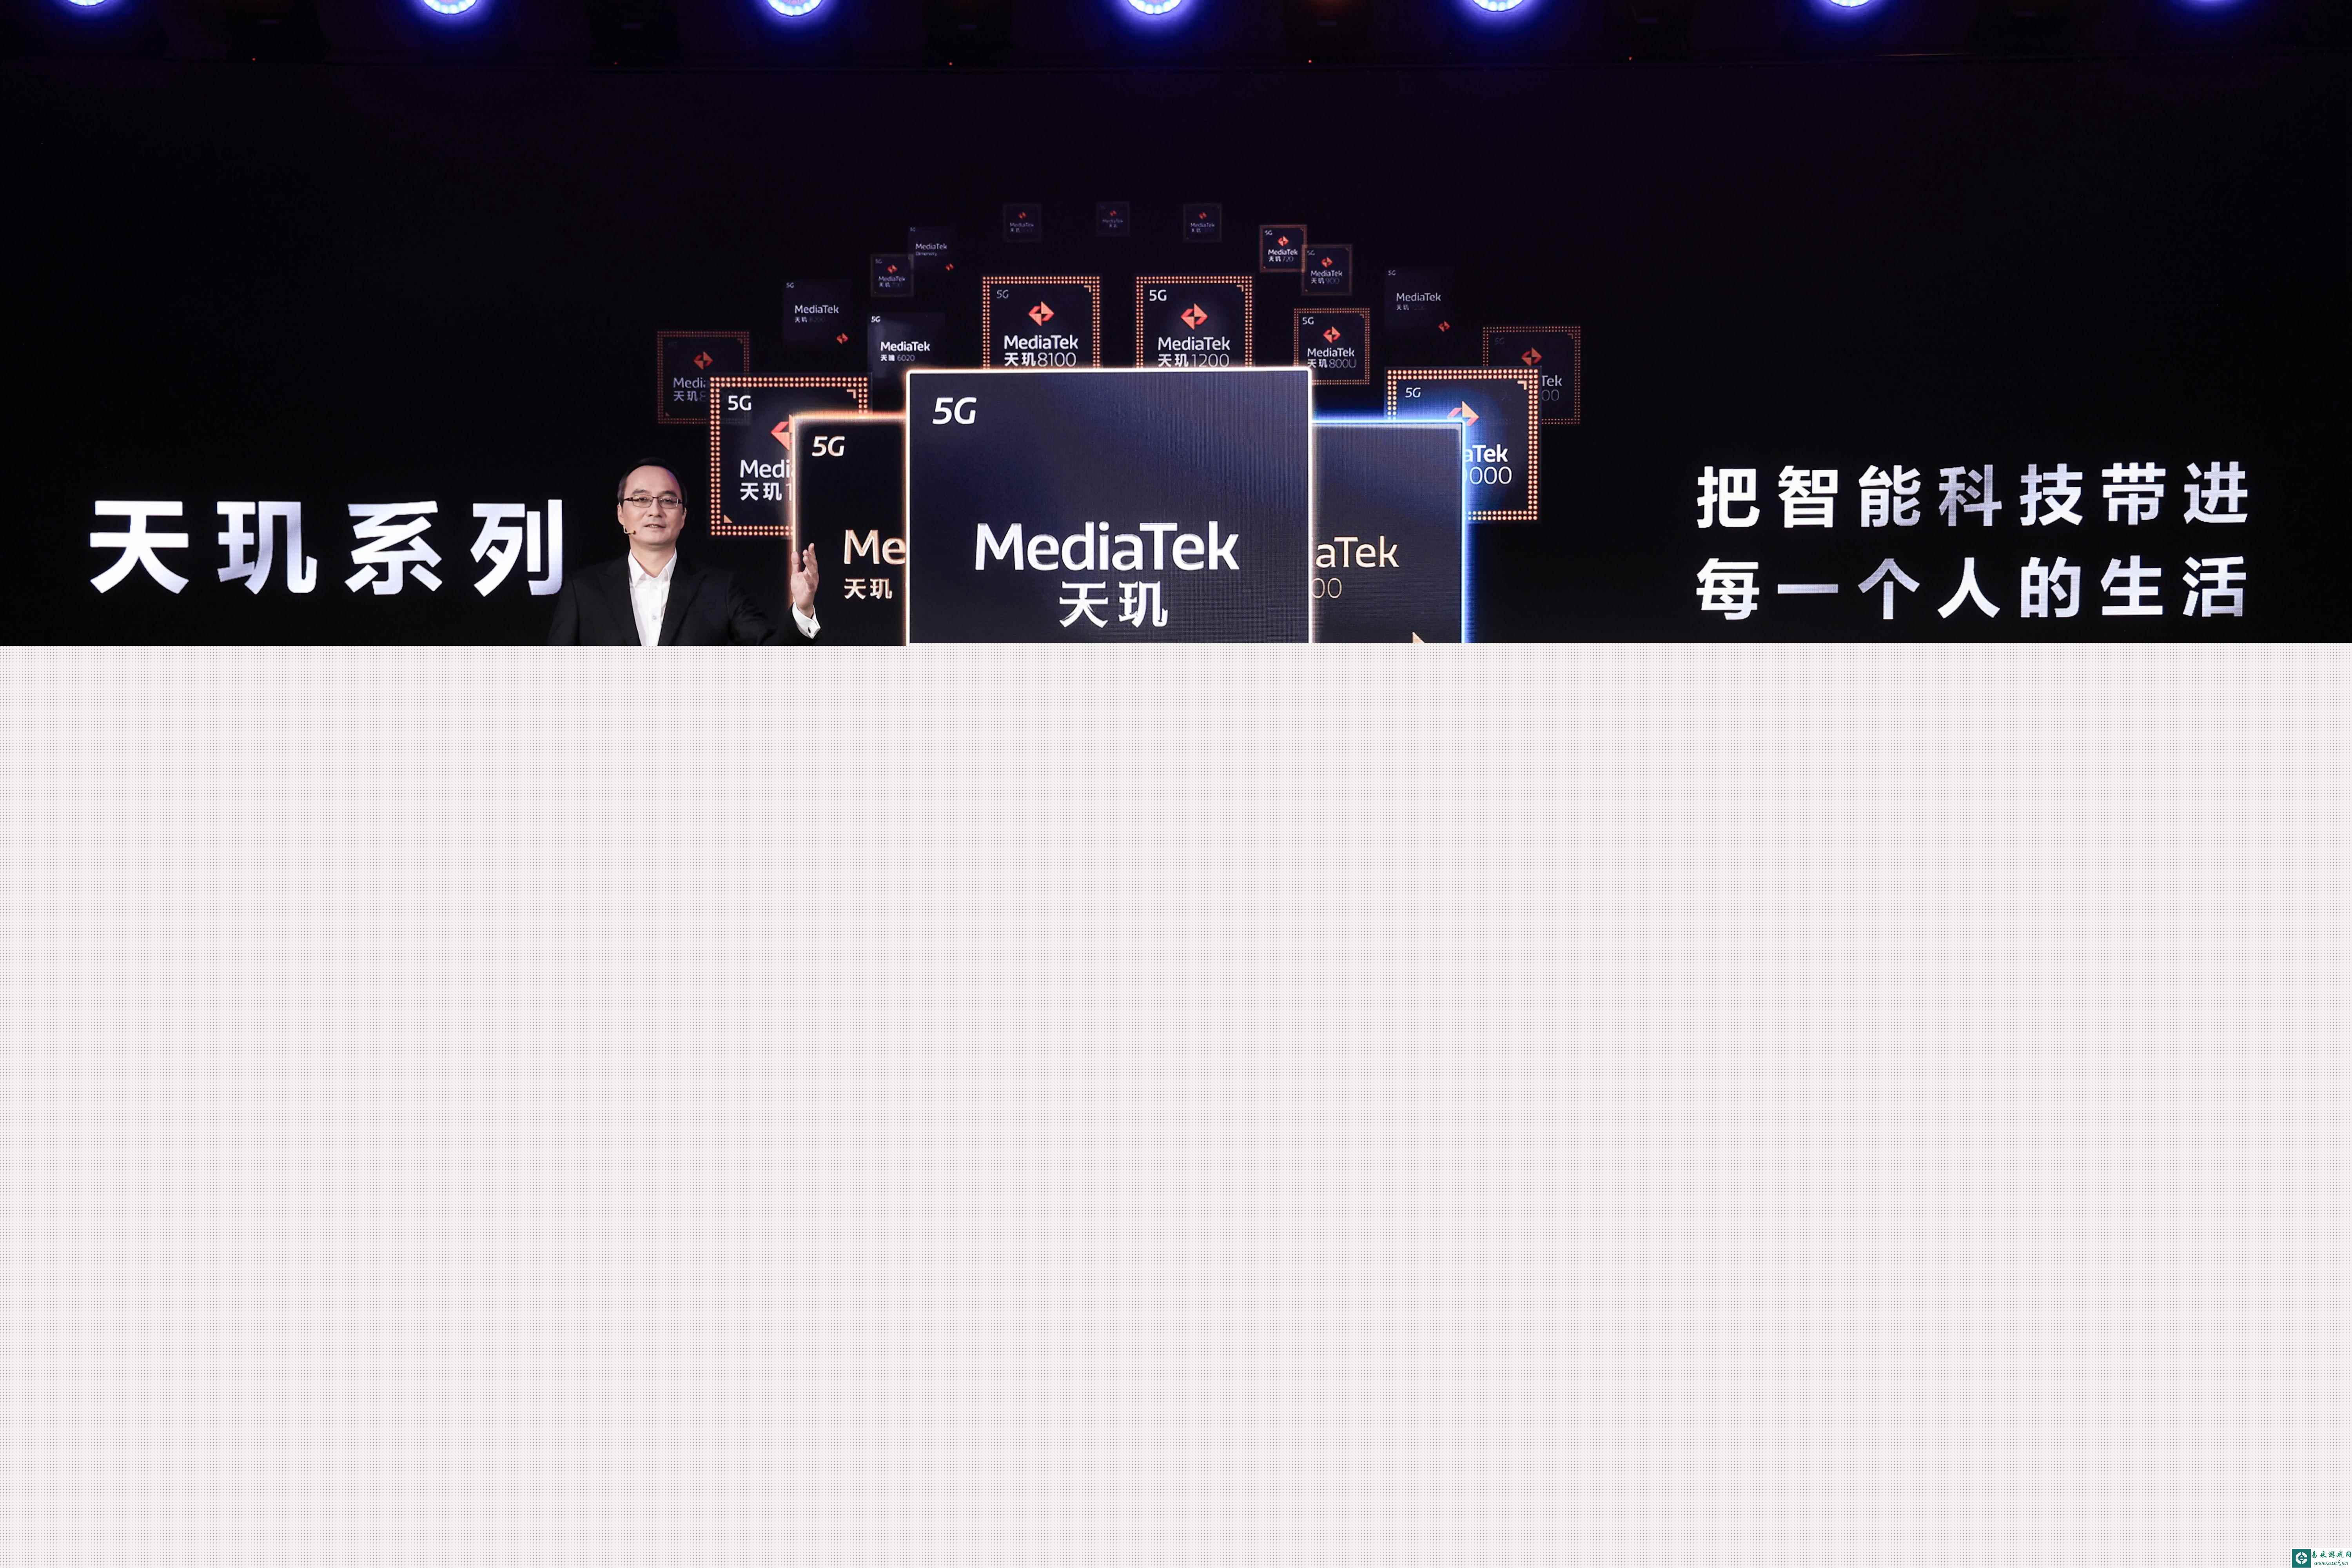 MediaTek发布天玑8300移动芯片，全面革新推动端侧生成式AI创新